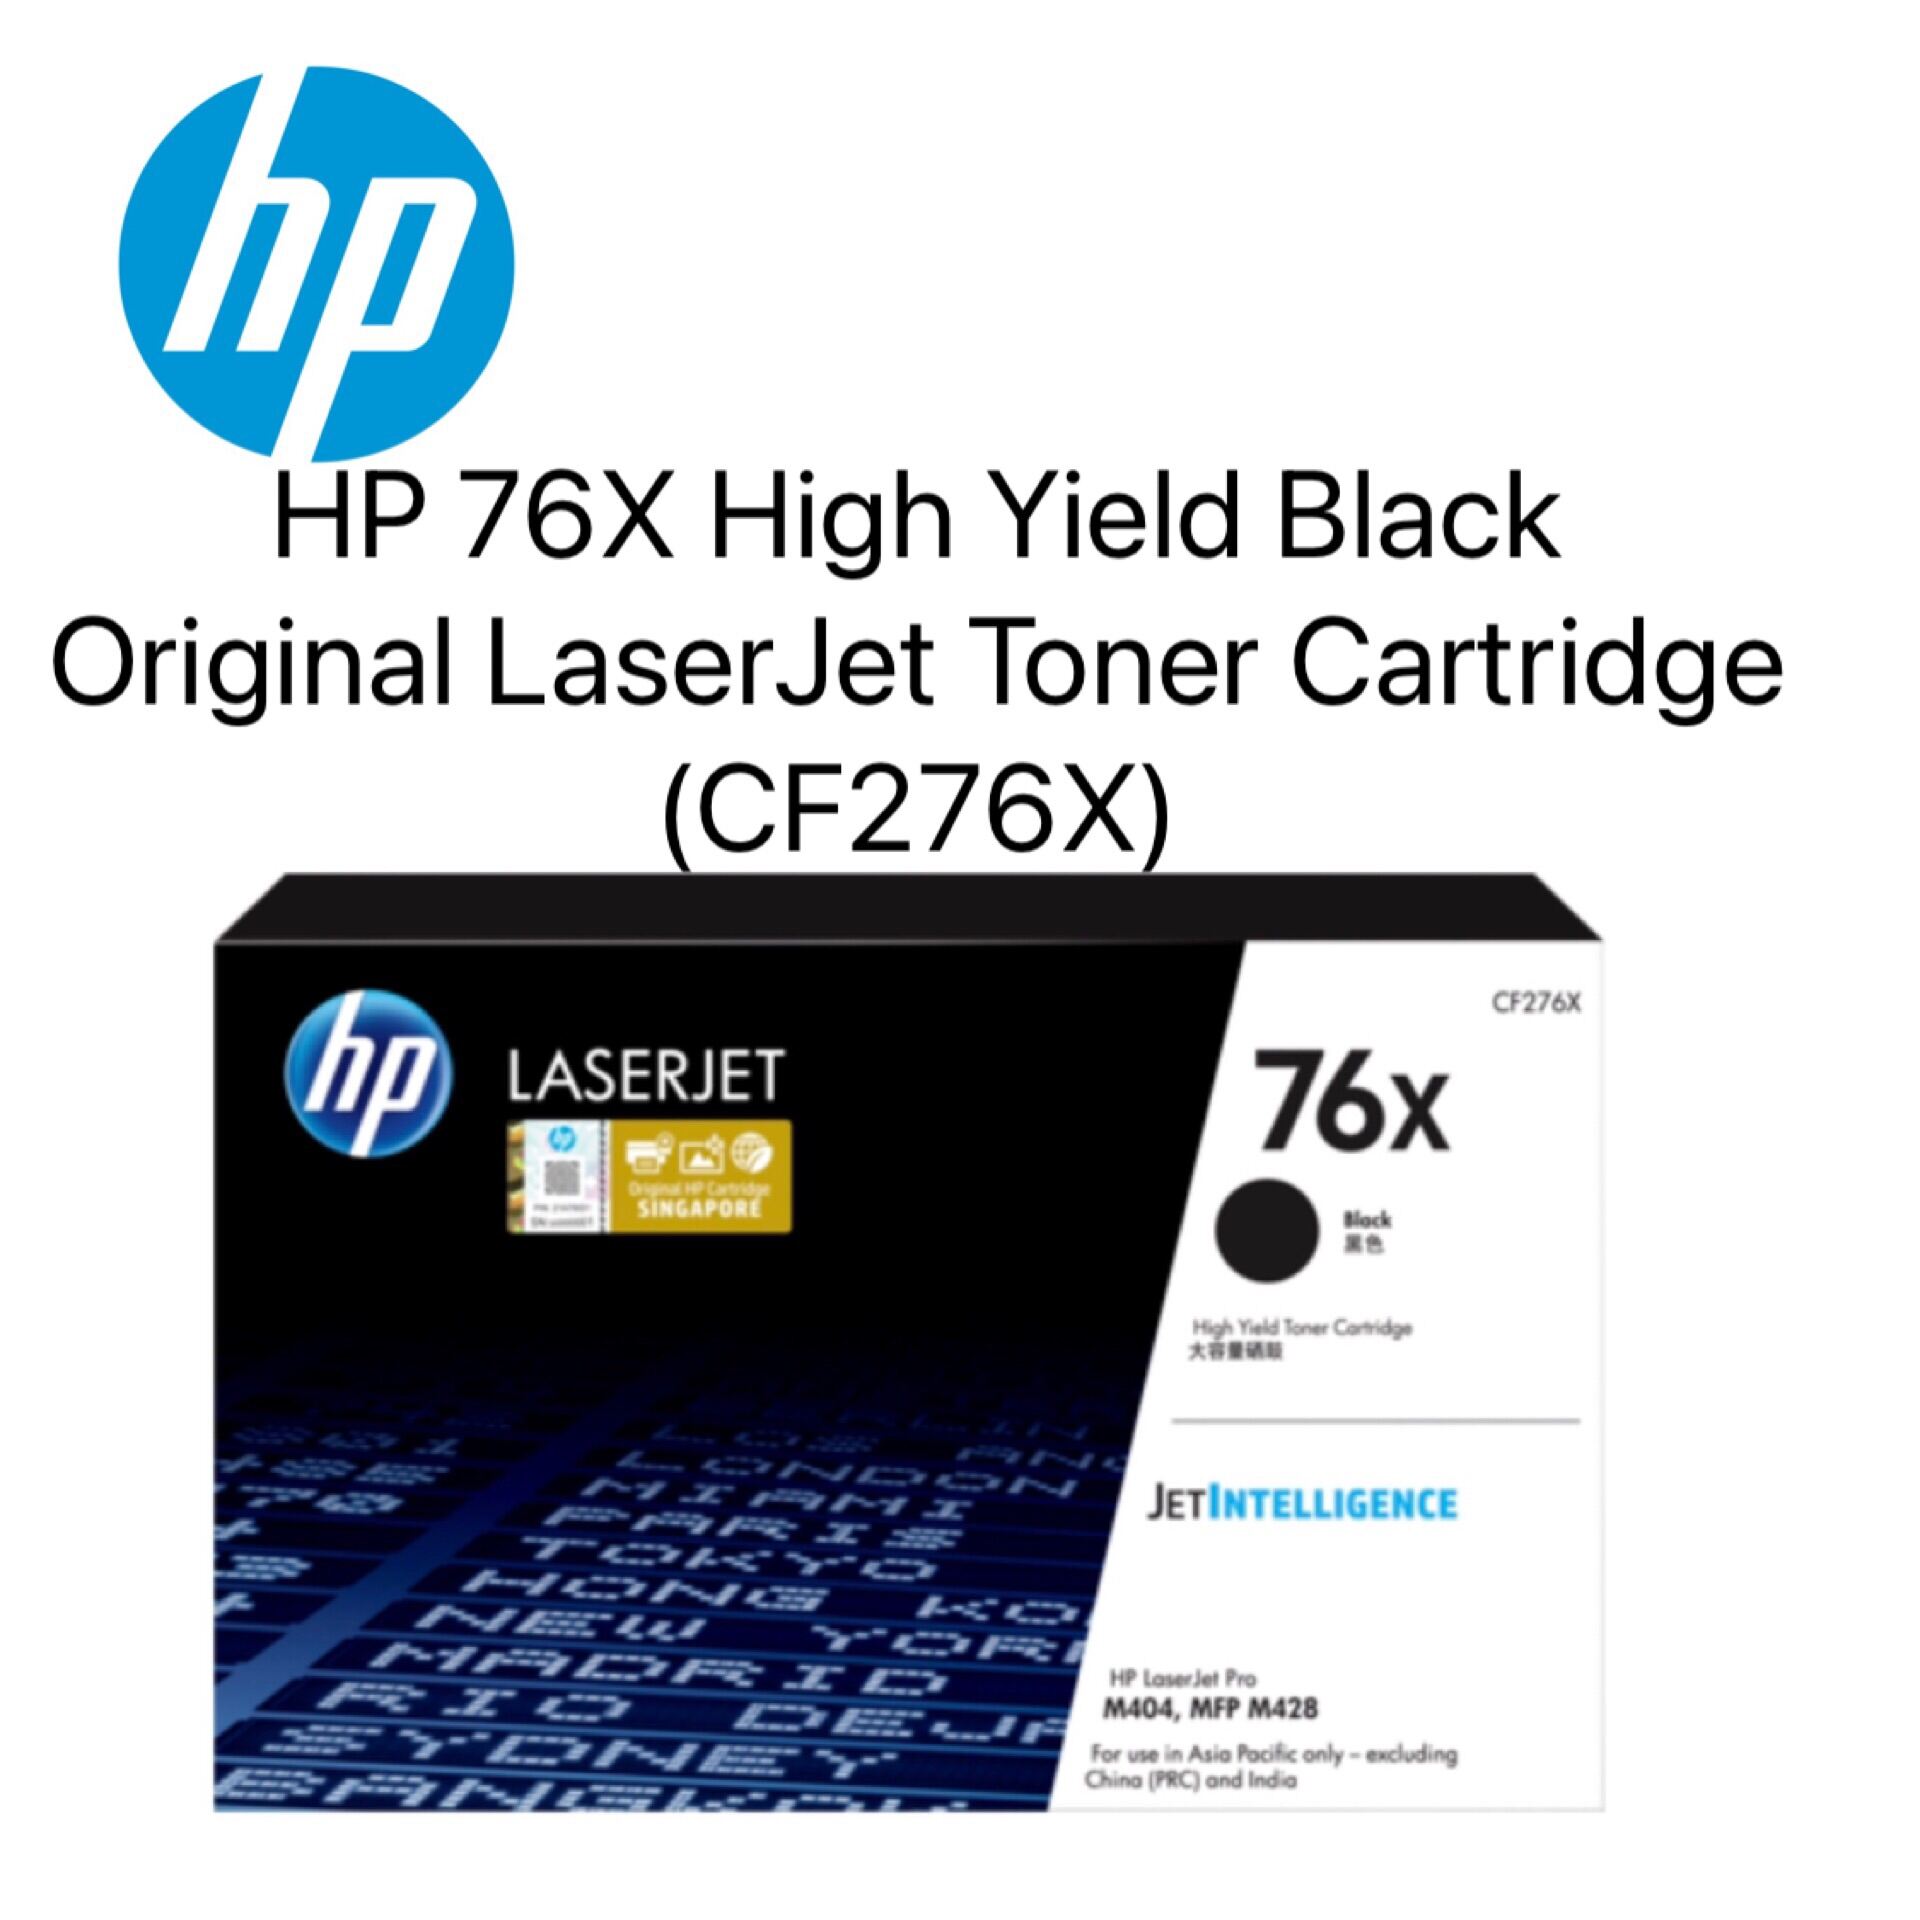 HP 76X High Yield Black Original LaserJet Toner Cartridge CF276X for